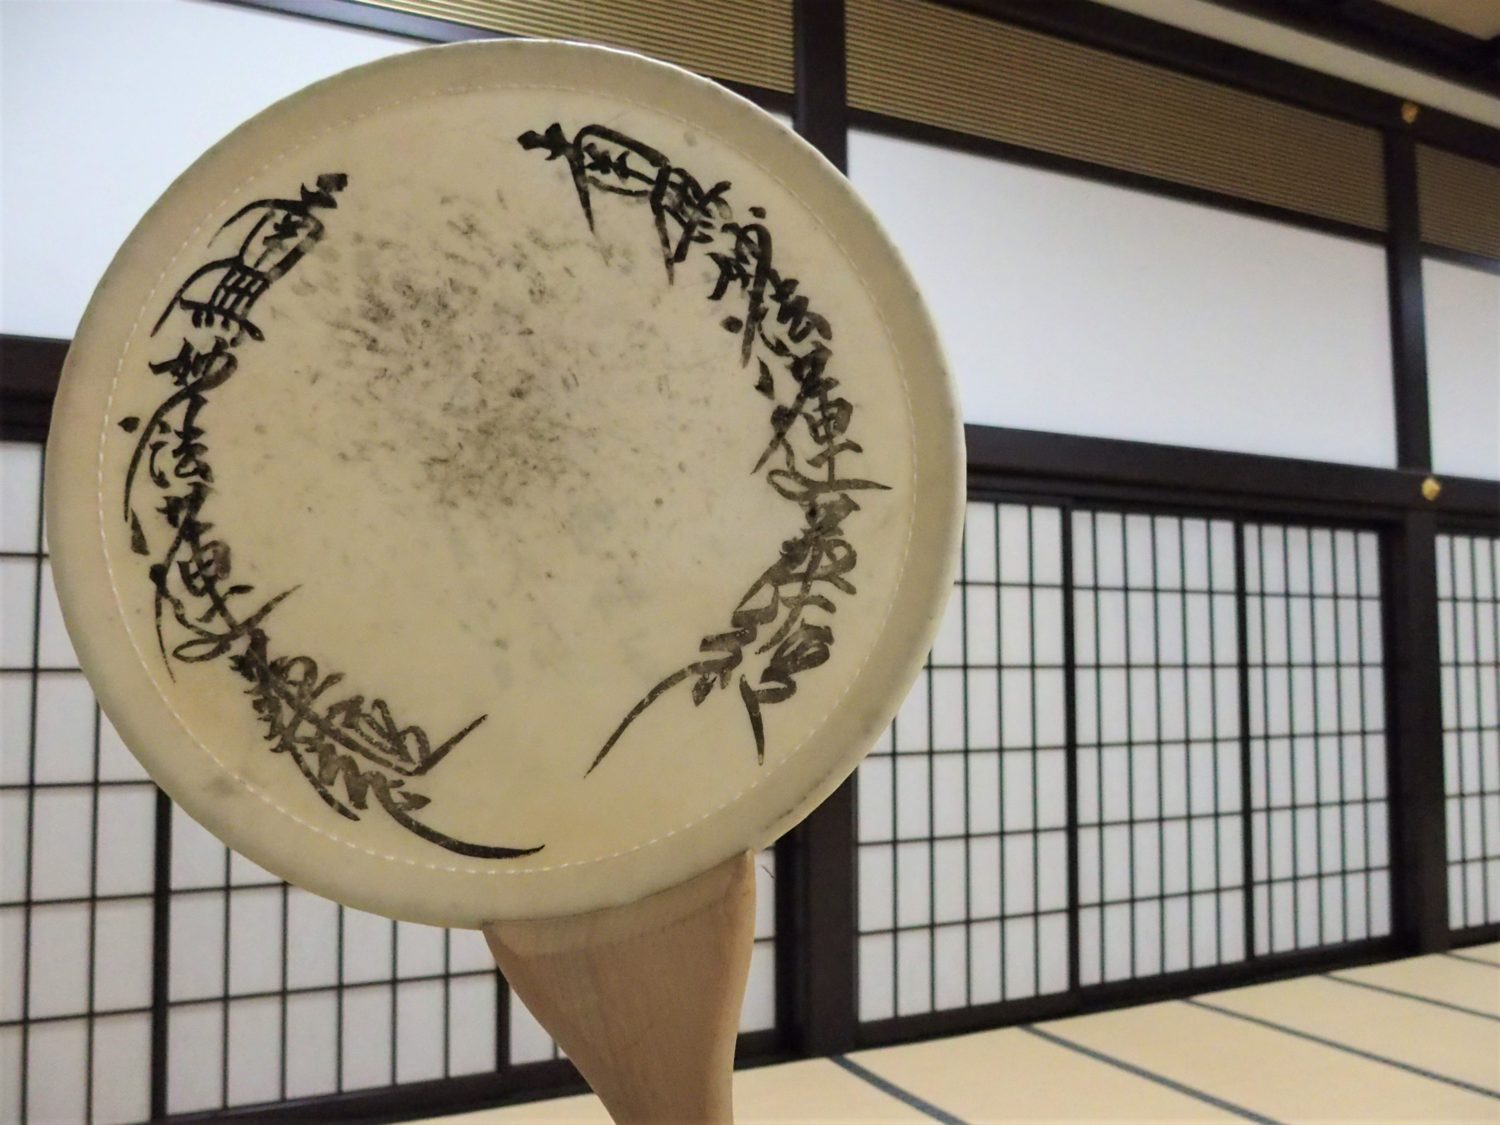 "Uchiwa daiko" (a type of Japanese drum)